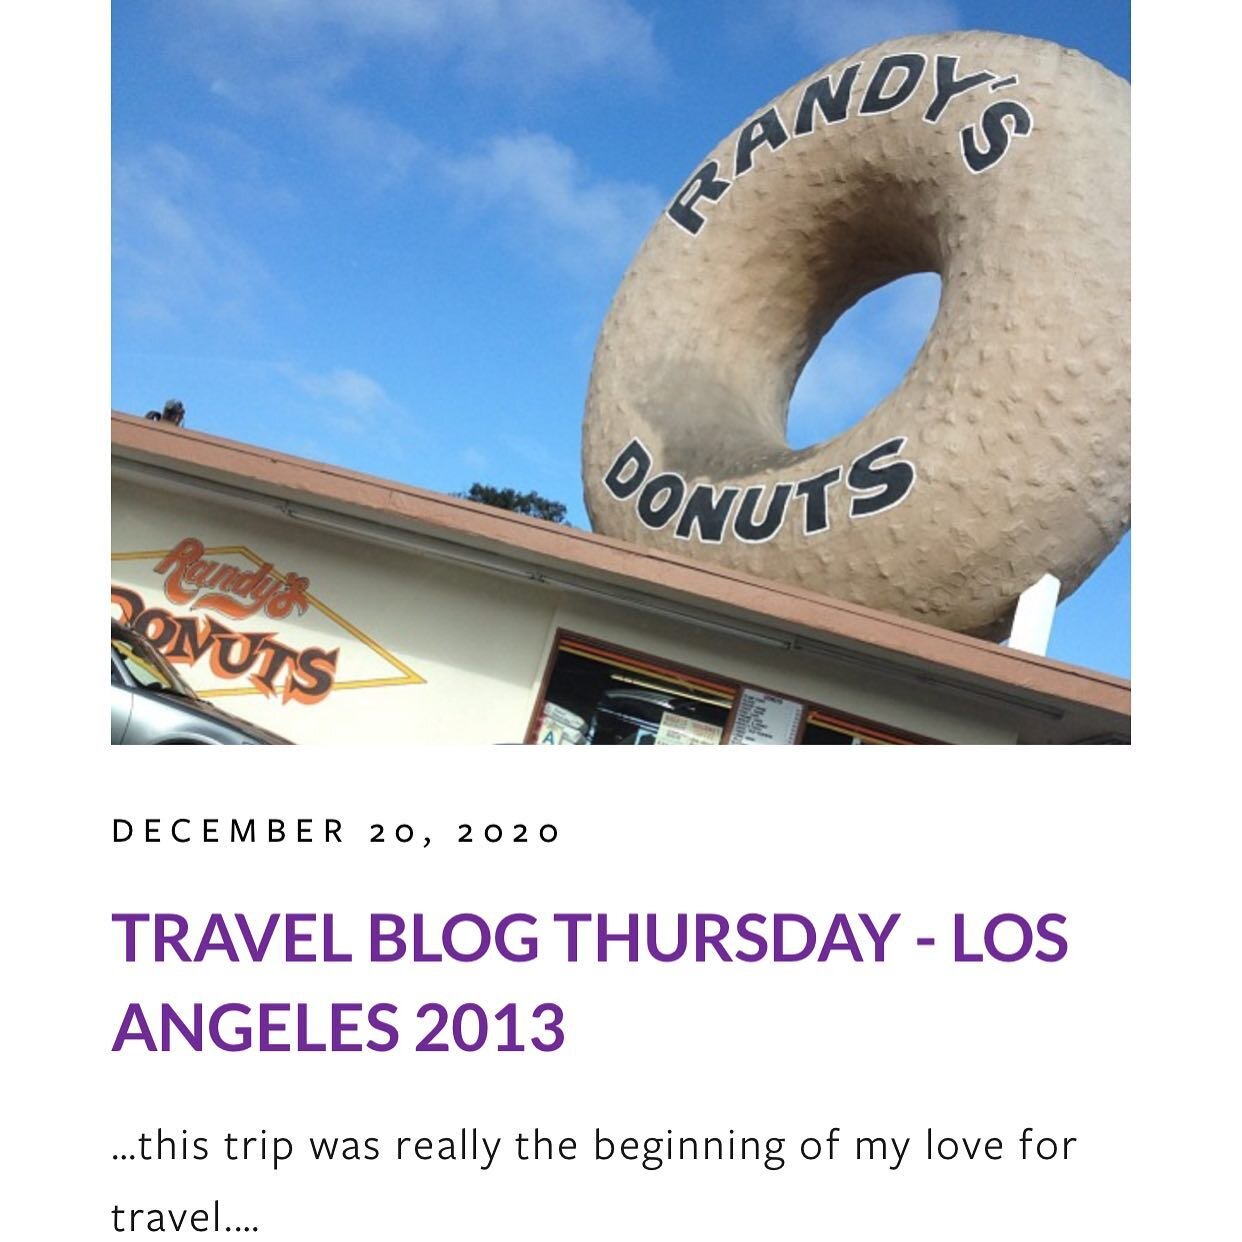 FIRST TIME IN LA  Travel Blog My first travel inspiration! Link in bio
.
.
.
#TasteTutor #Chef #Food #Cooking #LosAngeles #Seattle #Eat #LA #Foodie #FoodPorn #California #CaliVibes #Travel #FoodTour #GirlsTrip #Blog #Blogger #BlackGirlsWhoBlog #Cultu